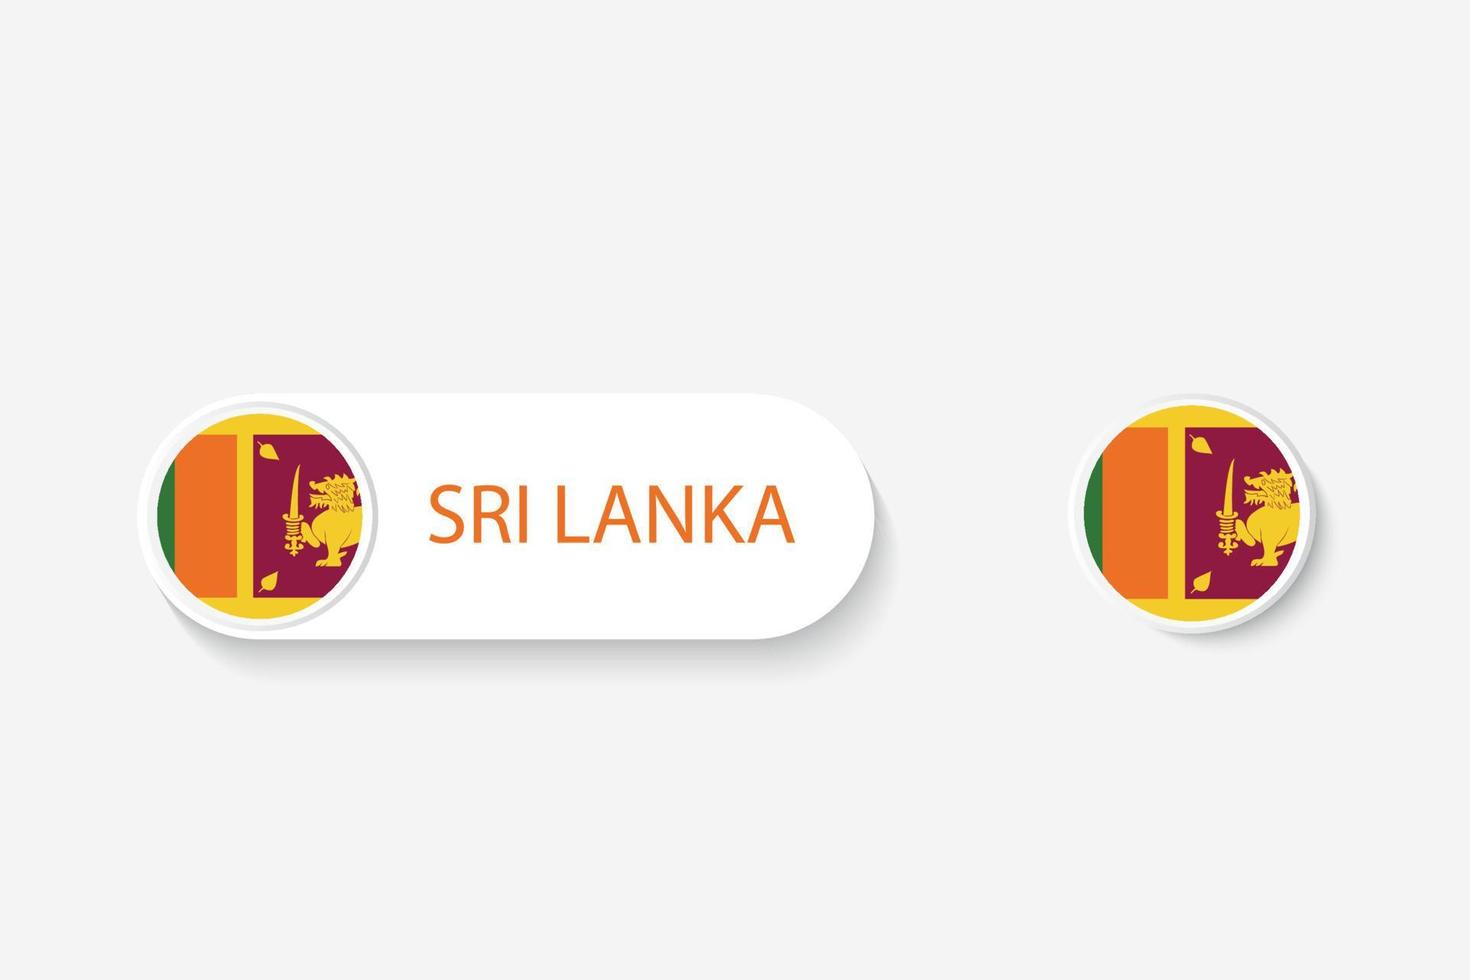 sri lanka knop vlag in illustratie van ovaal gevormd met woord sri lanka. en knopvlag sri lanka. vector